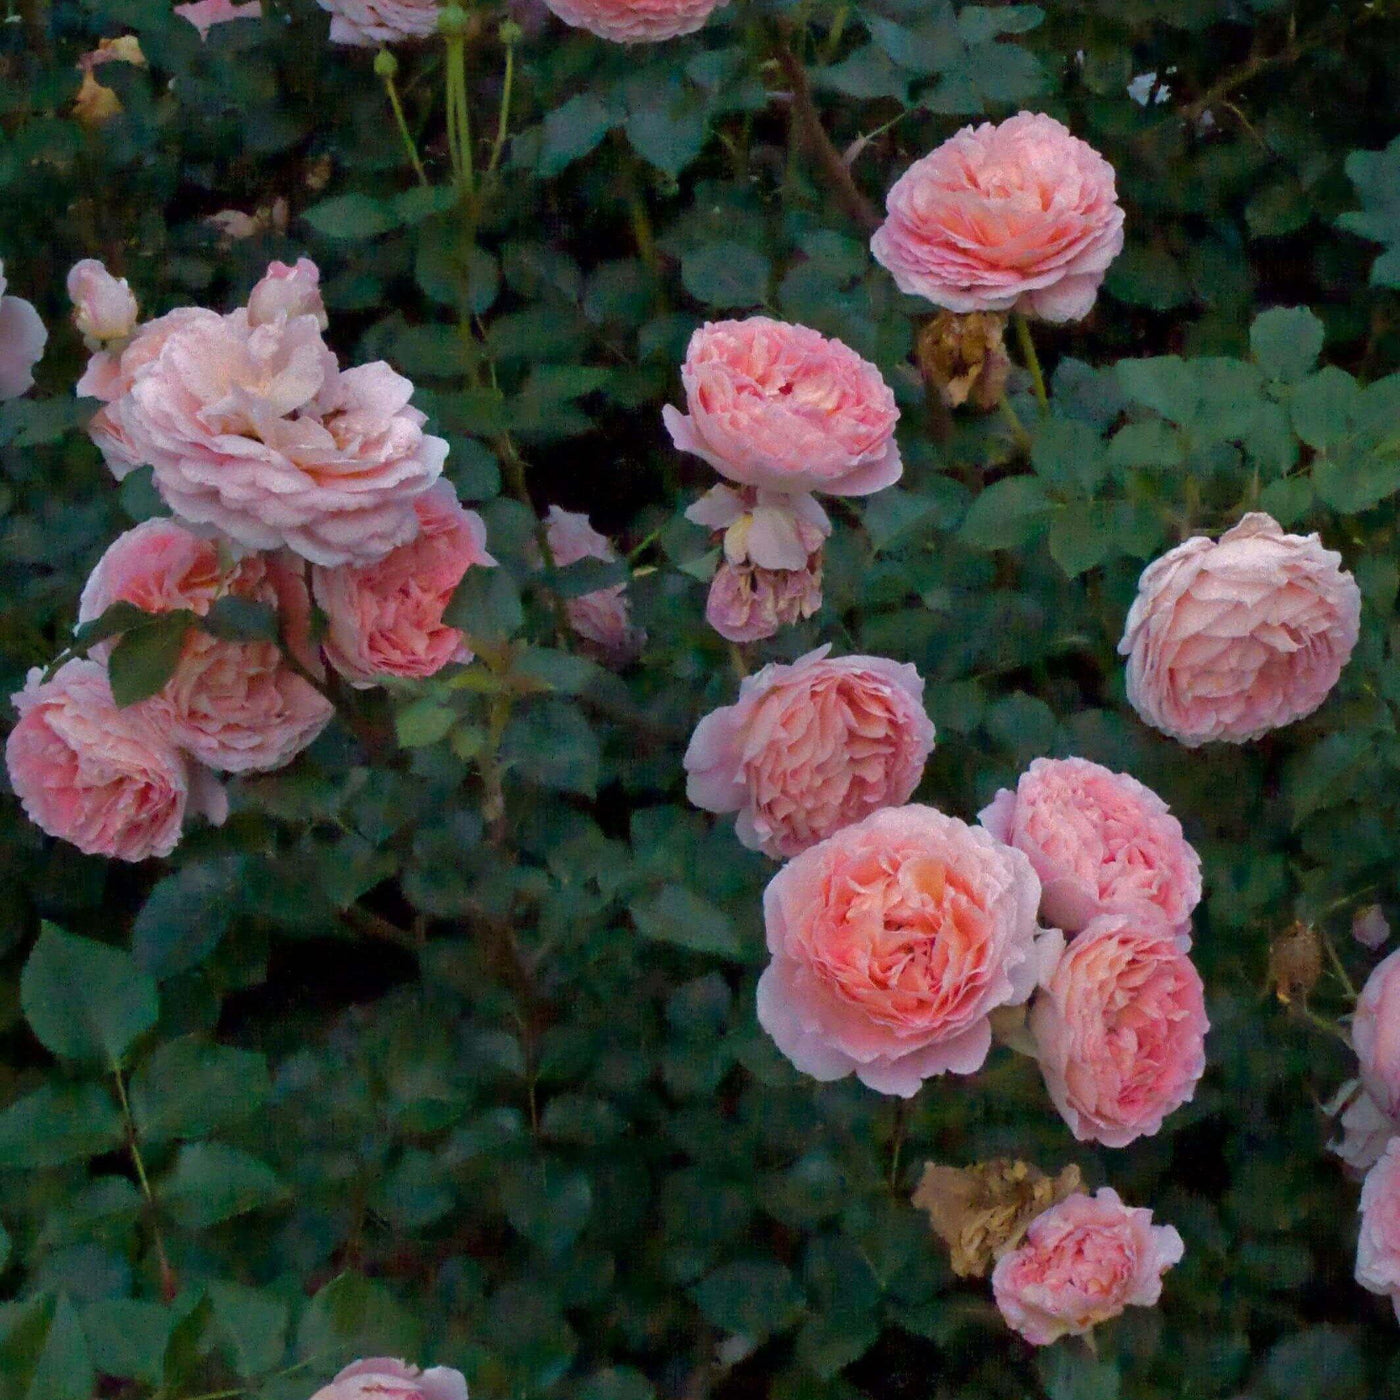 ABRAHAM DARBY ®' - Trandafir cu flori grupate (floribunda) creat in Anglia de David Austin - Famous Roses